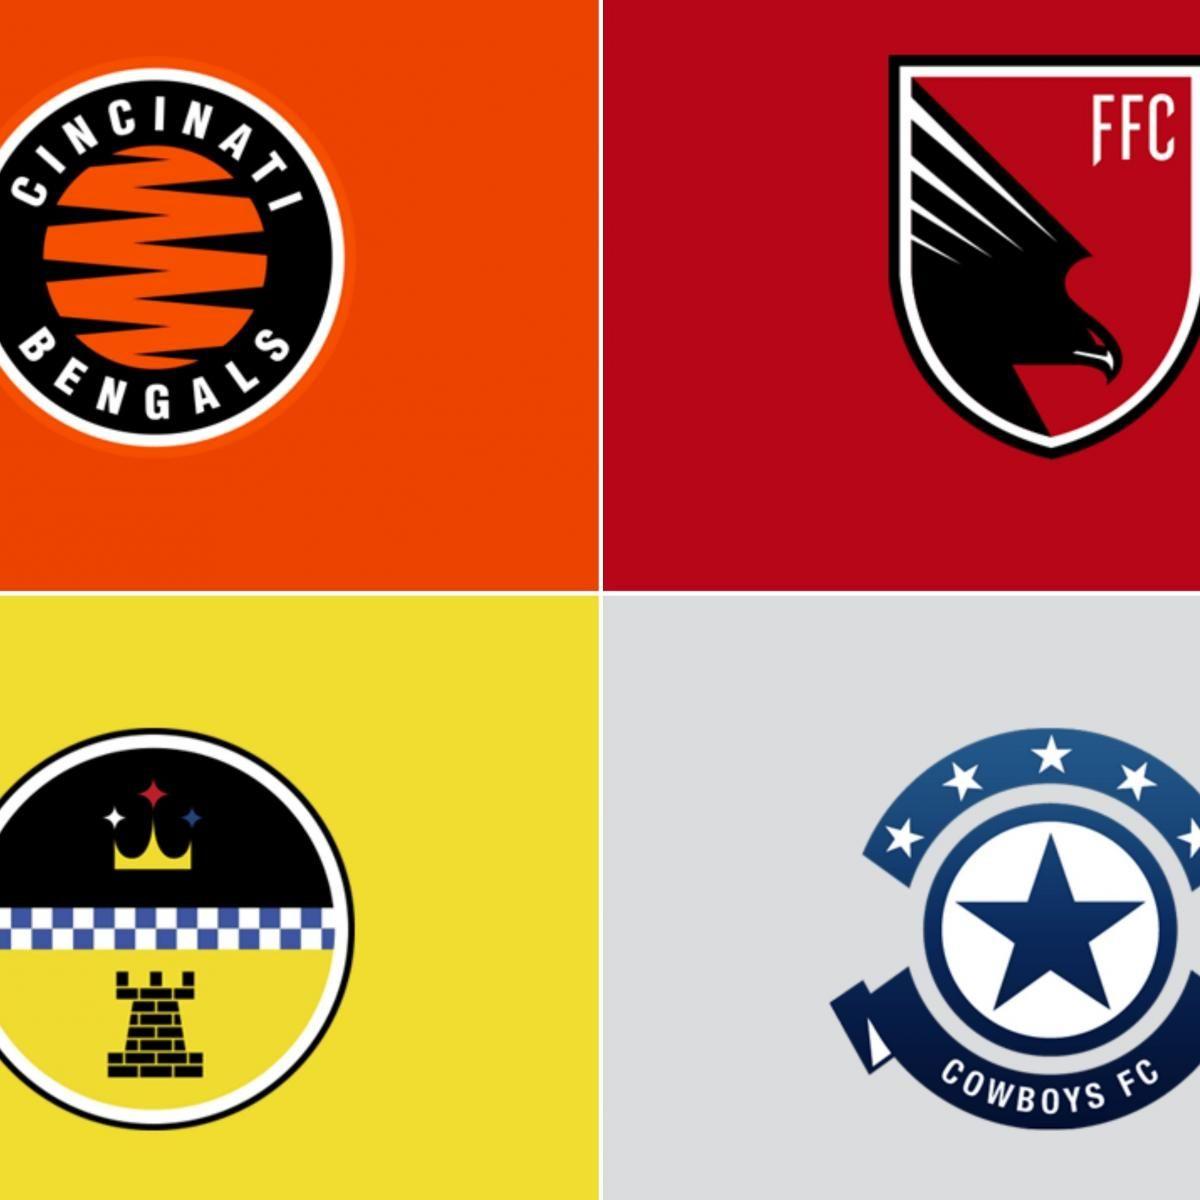 FFC Soccer Logo - NFL Logos Redesigned to Look Like European Football (Soccer) Logos ...